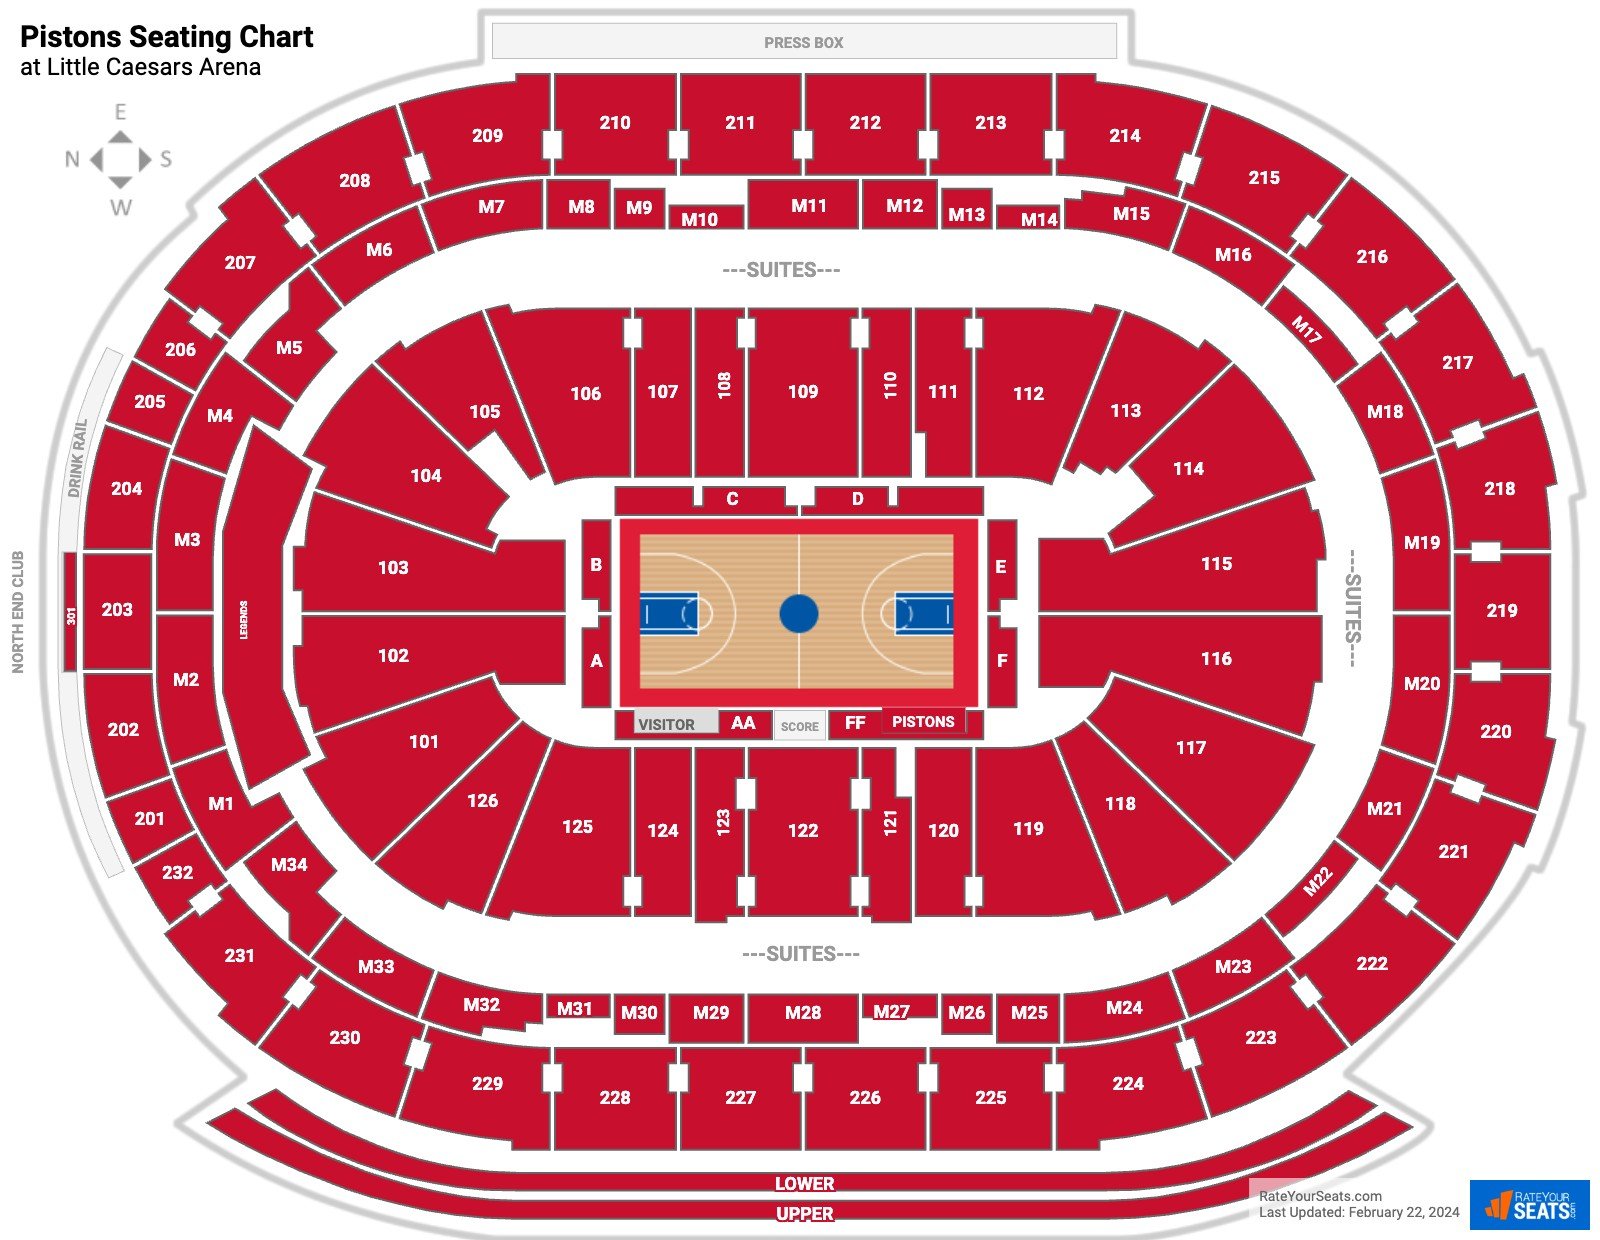 Detroit Pistons Seating Chart - RateYourSeats.com